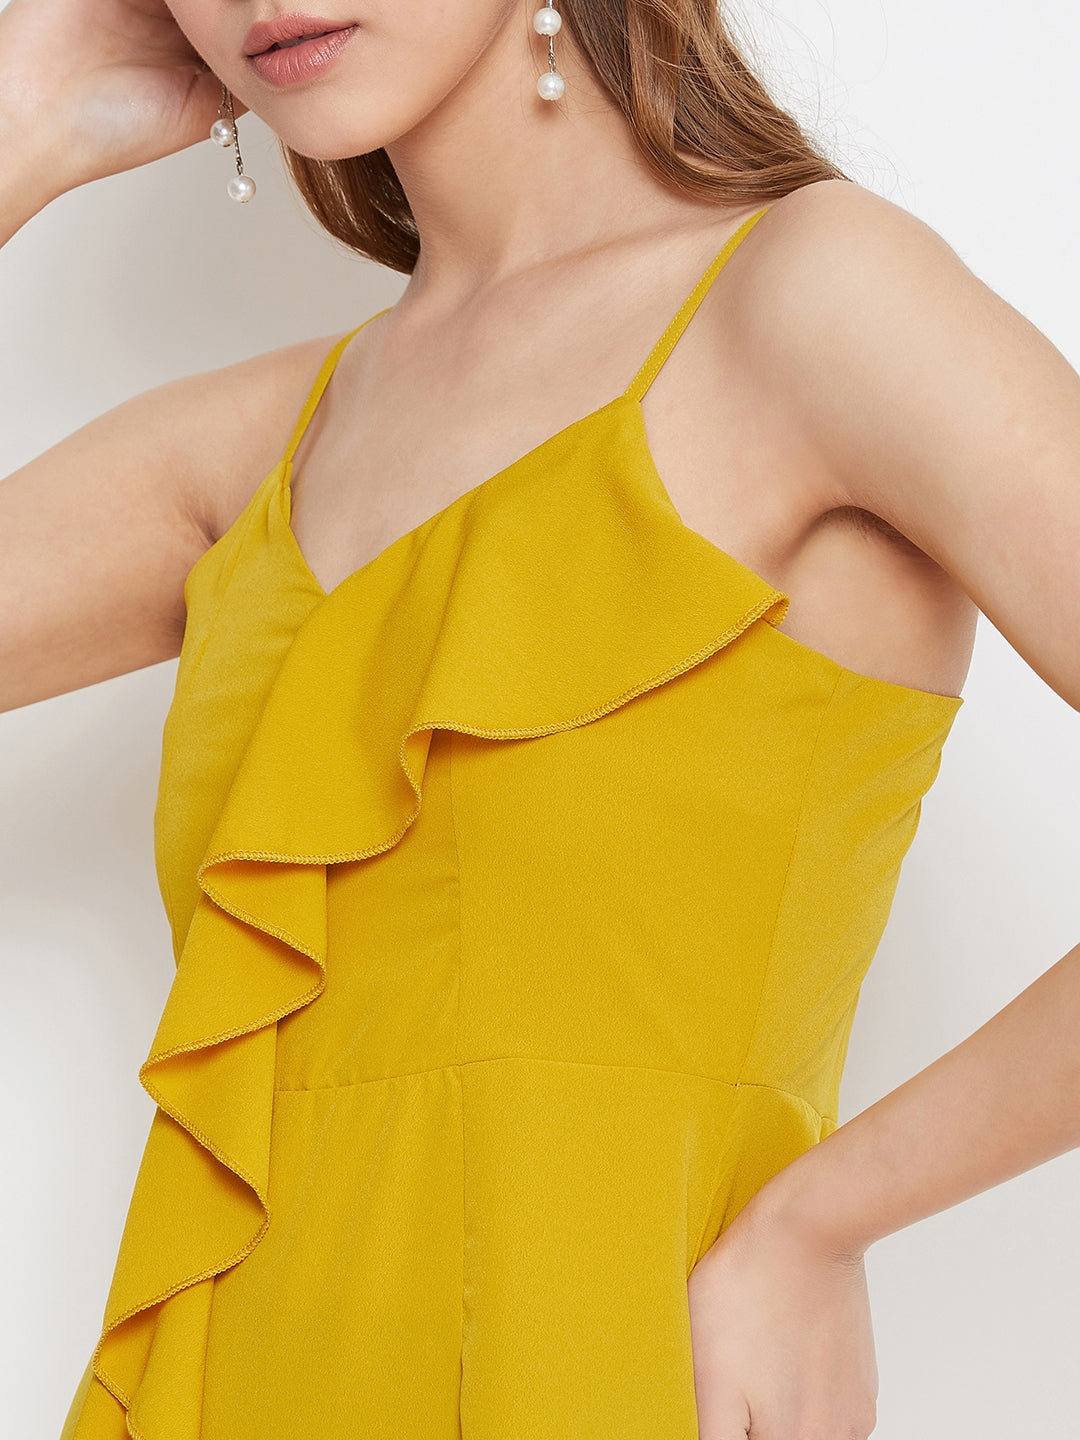 Berrylush Women Solid Yellow Front Frill V-Neck Thigh-High Slit Maxi Dress